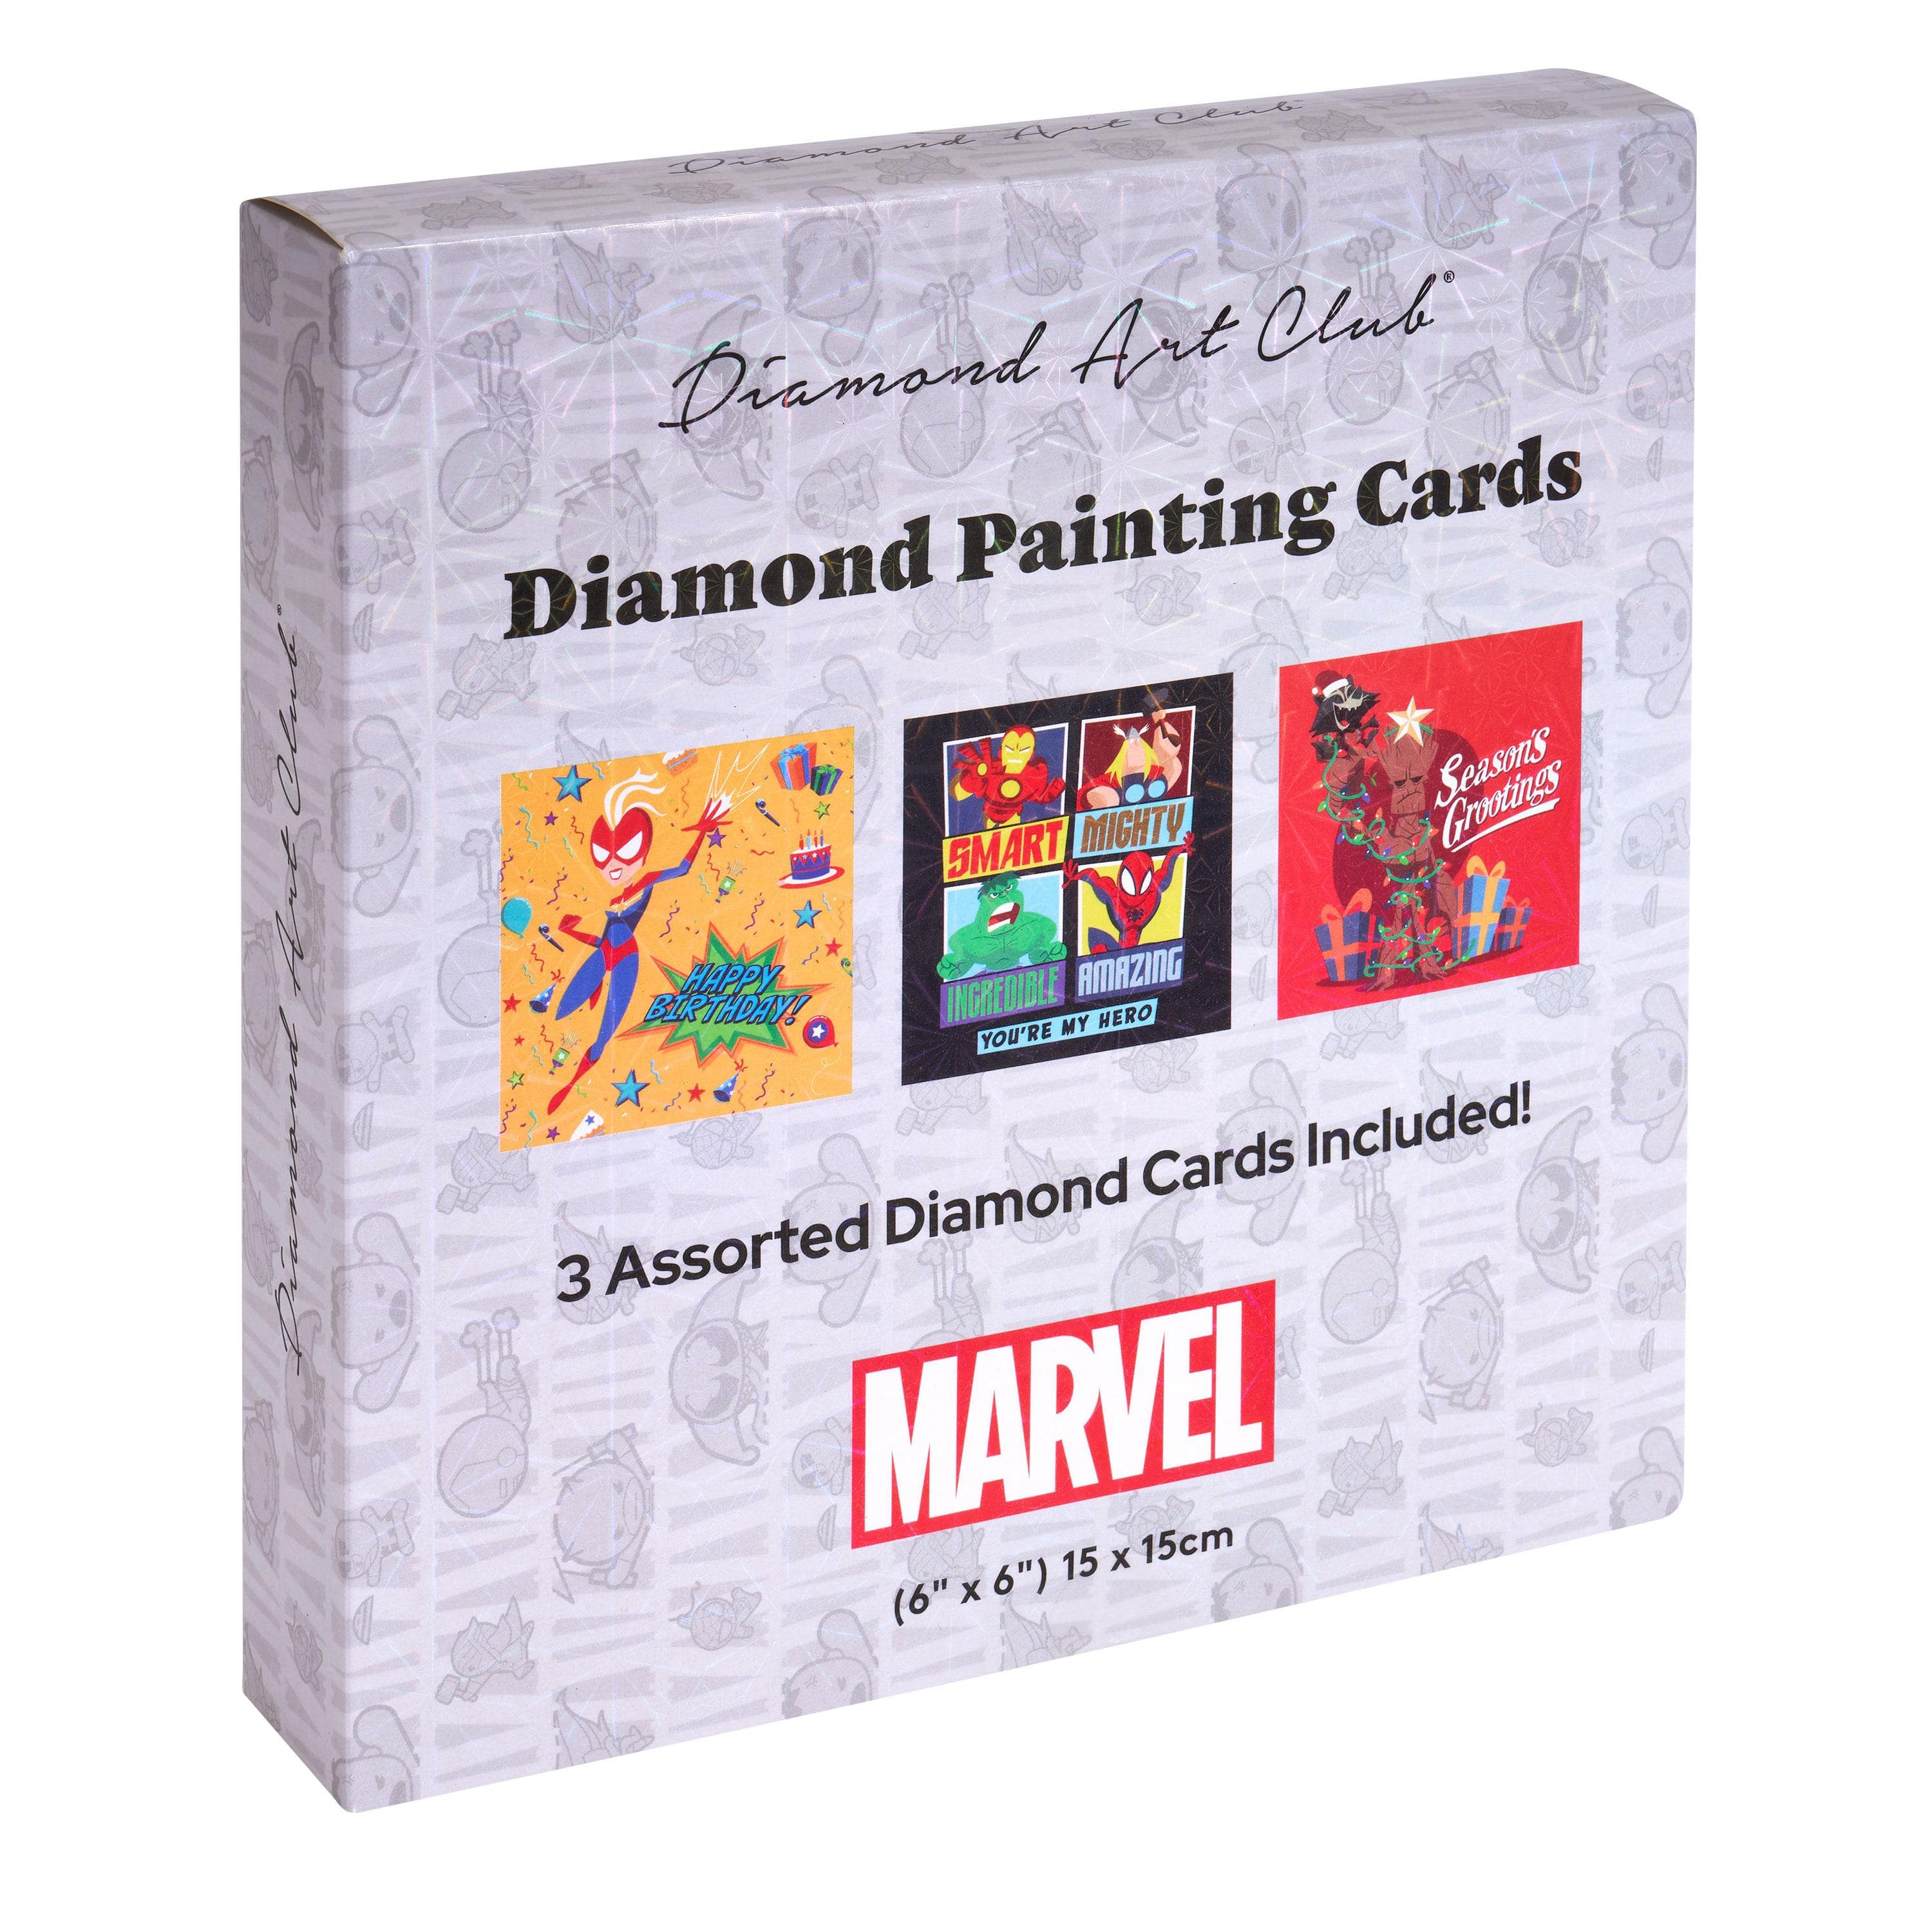 Marvel Full Diamond Painting Kit - DIY - Diamond Art Home